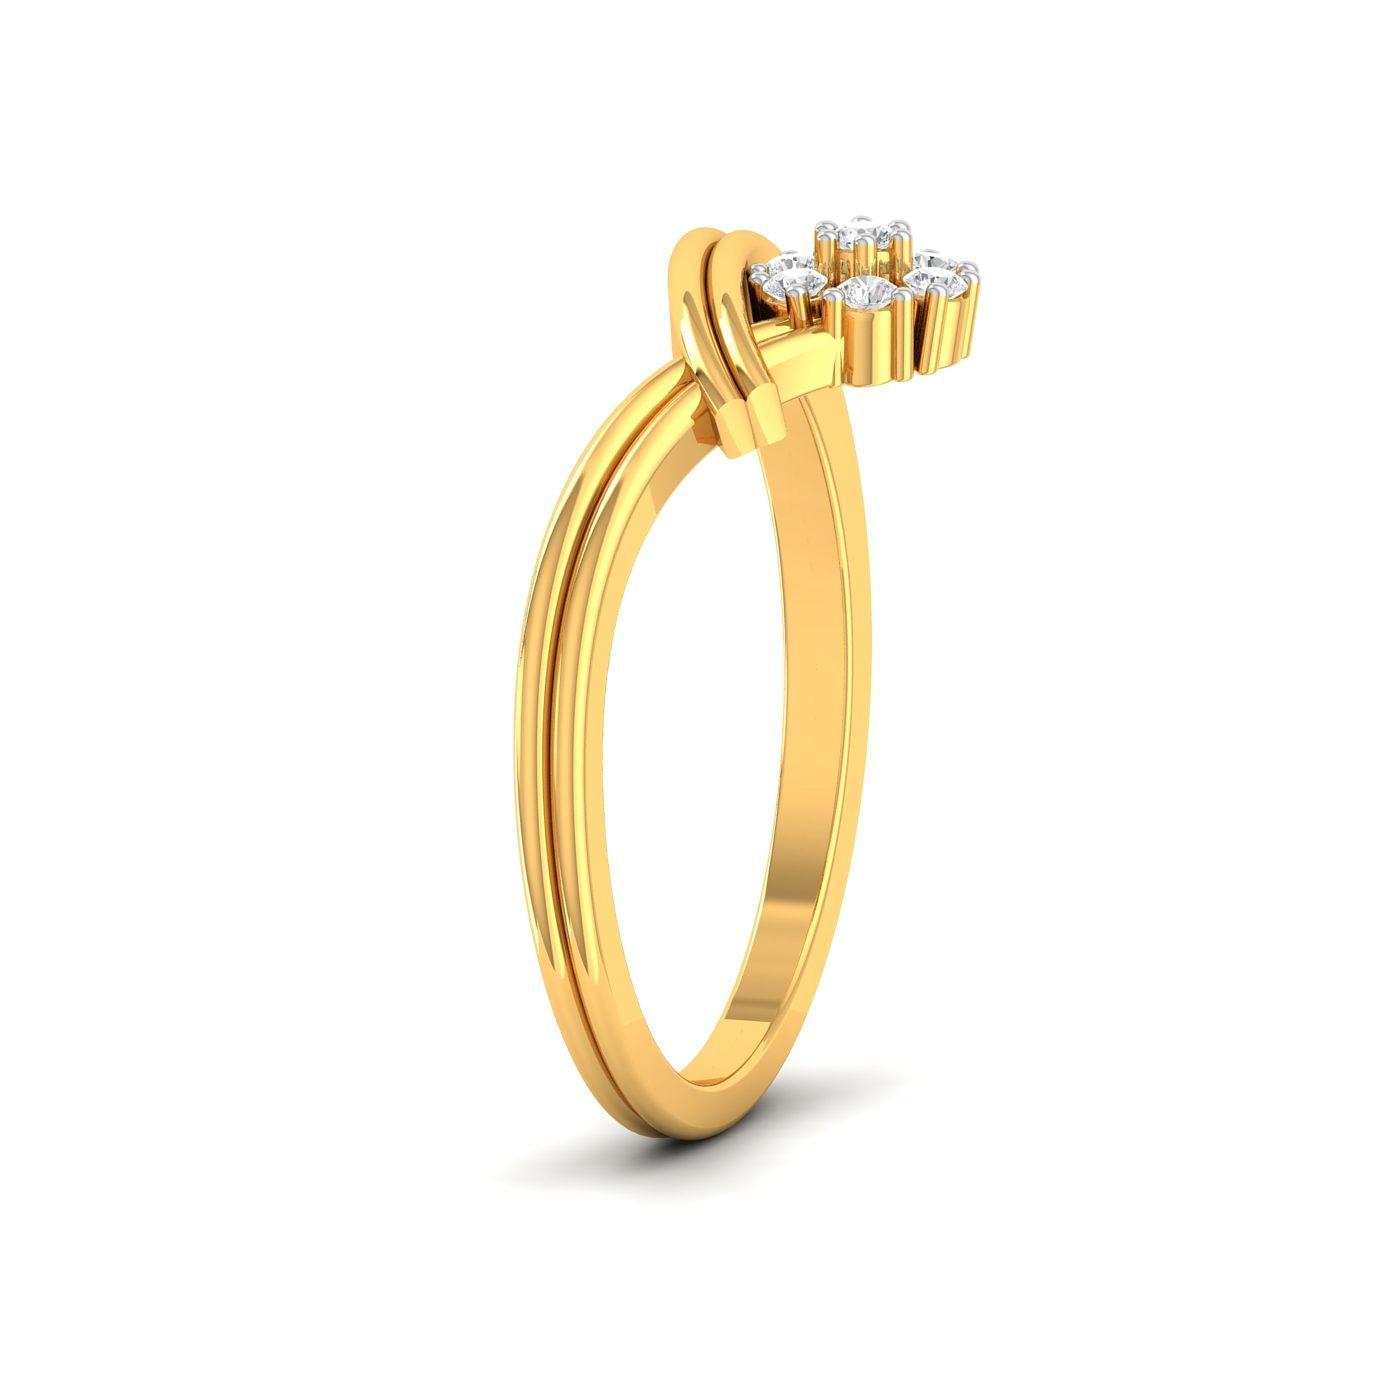 Designer 14k Yellow Gold Claire 4 Stone Diamond Ring